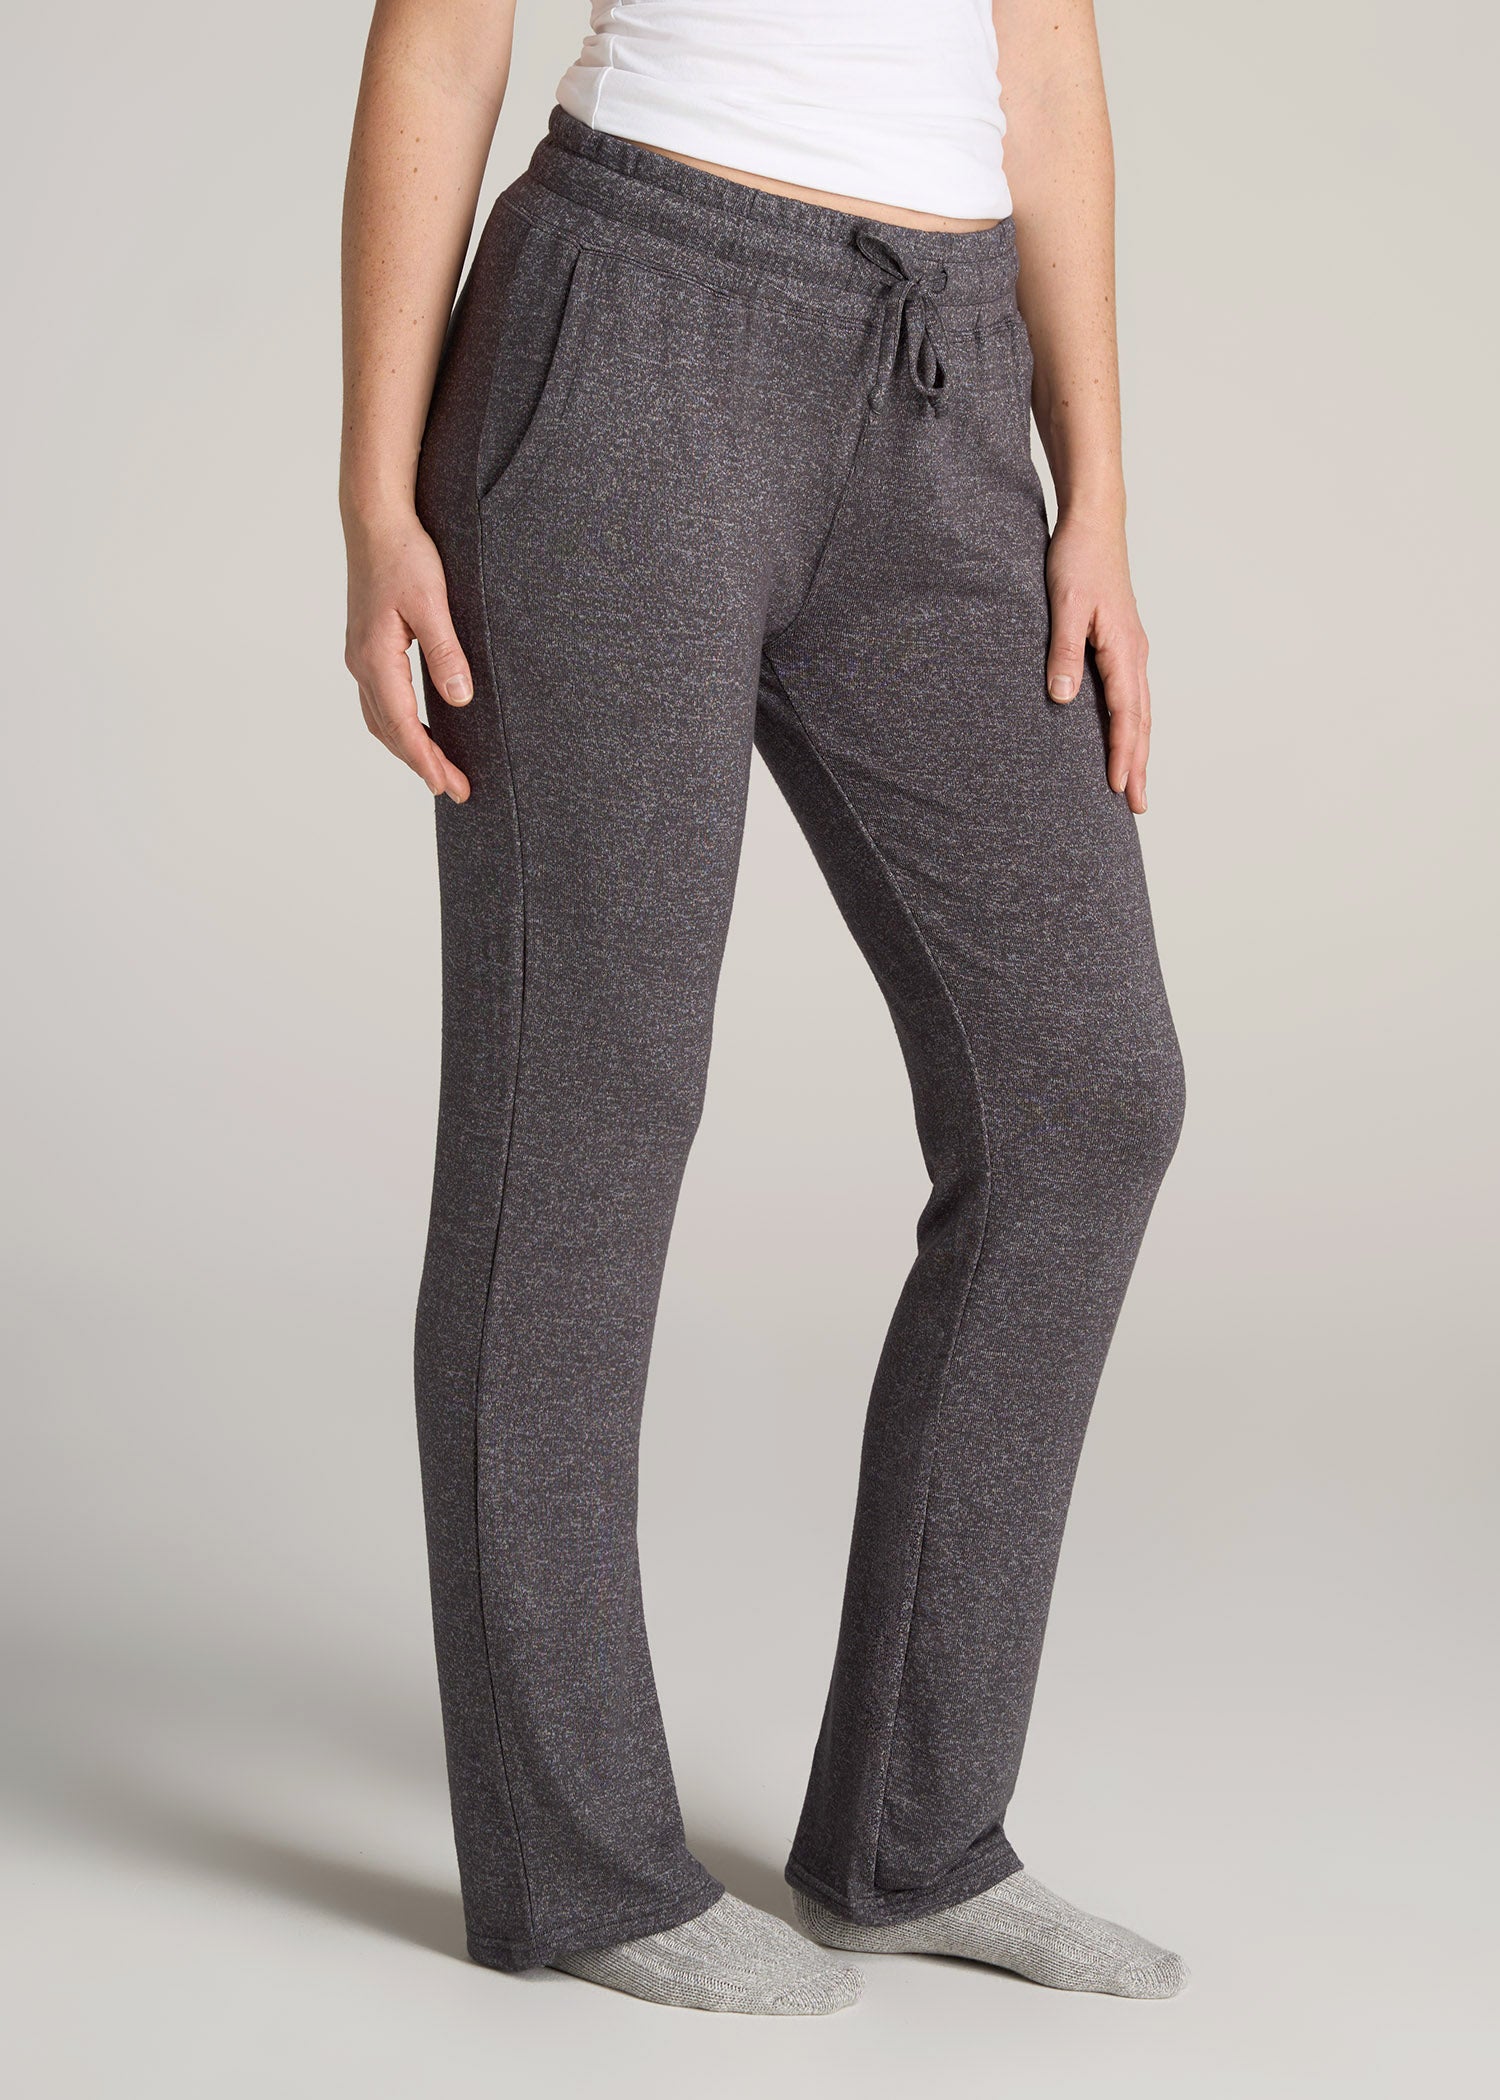 Women's Solid Pajama Pants, Soft & Comfy Lounge Pants Loose Fit Home Pants,  Women's Loungewear & Sleepwear